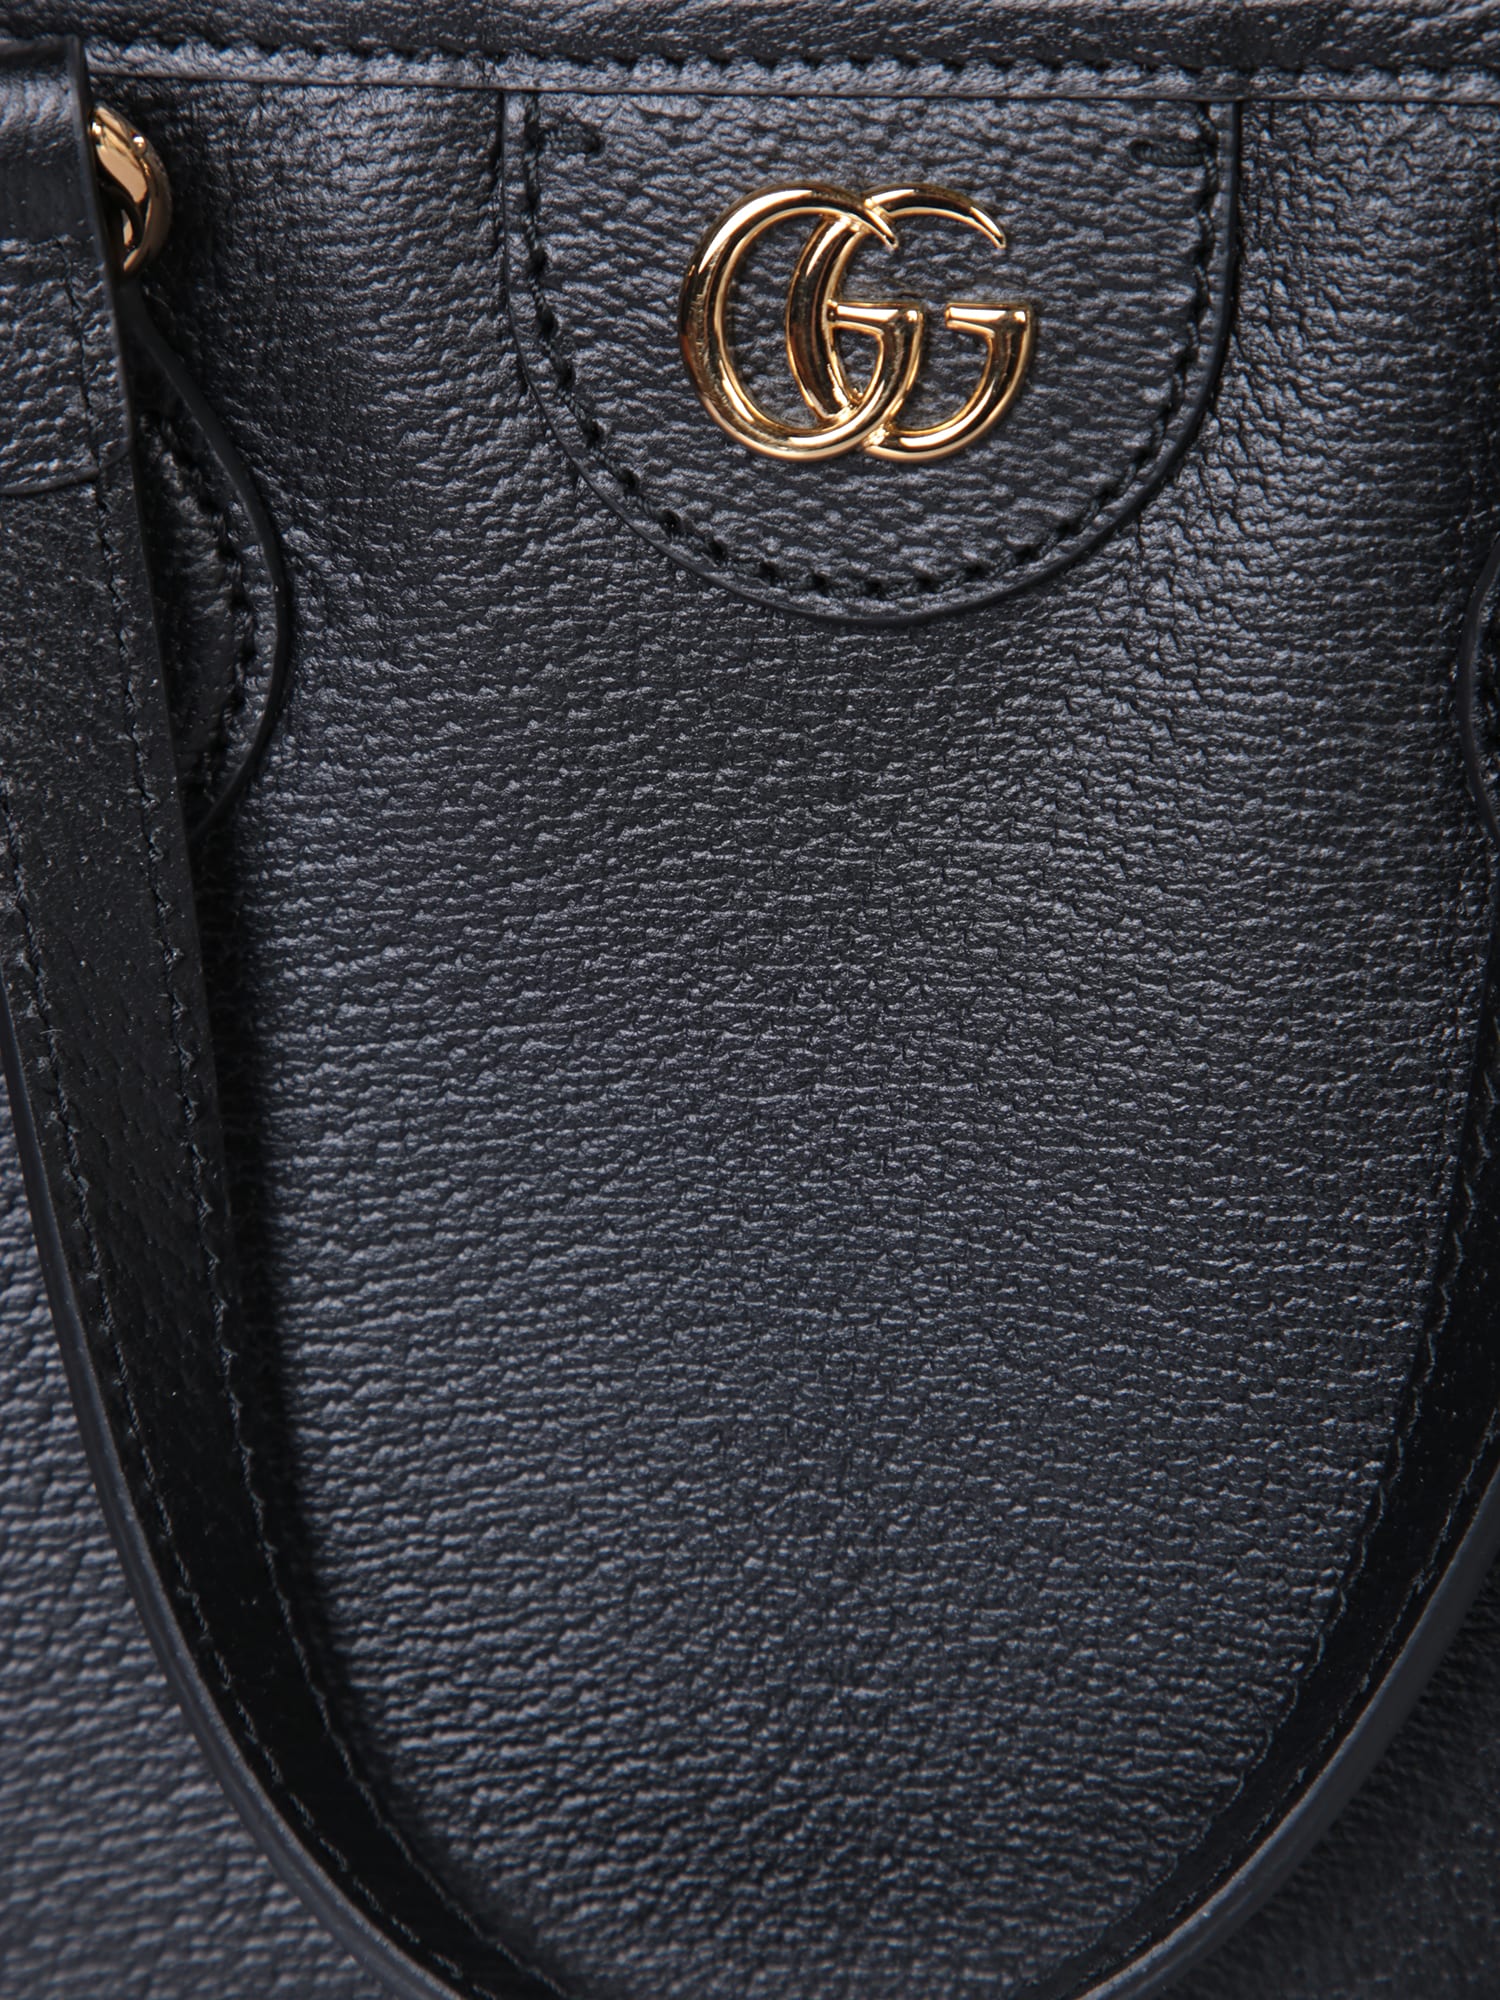 Shop Gucci Ophidia S Black Shopping Bag